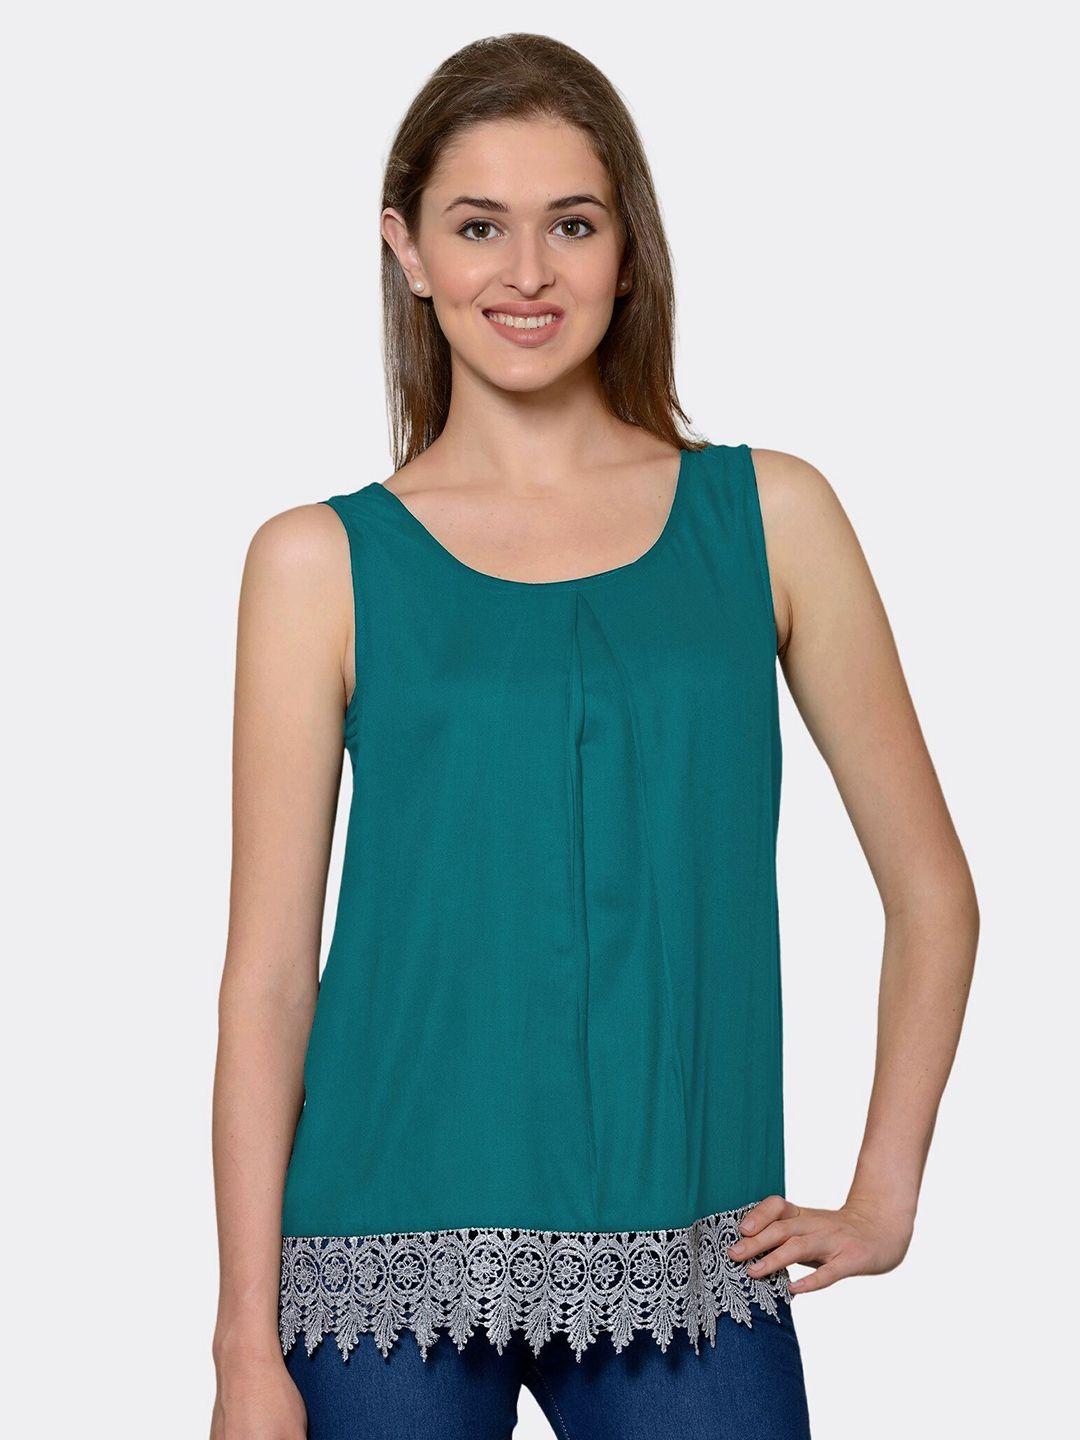 patrorna-women-green-round-neck-sleeveless-top